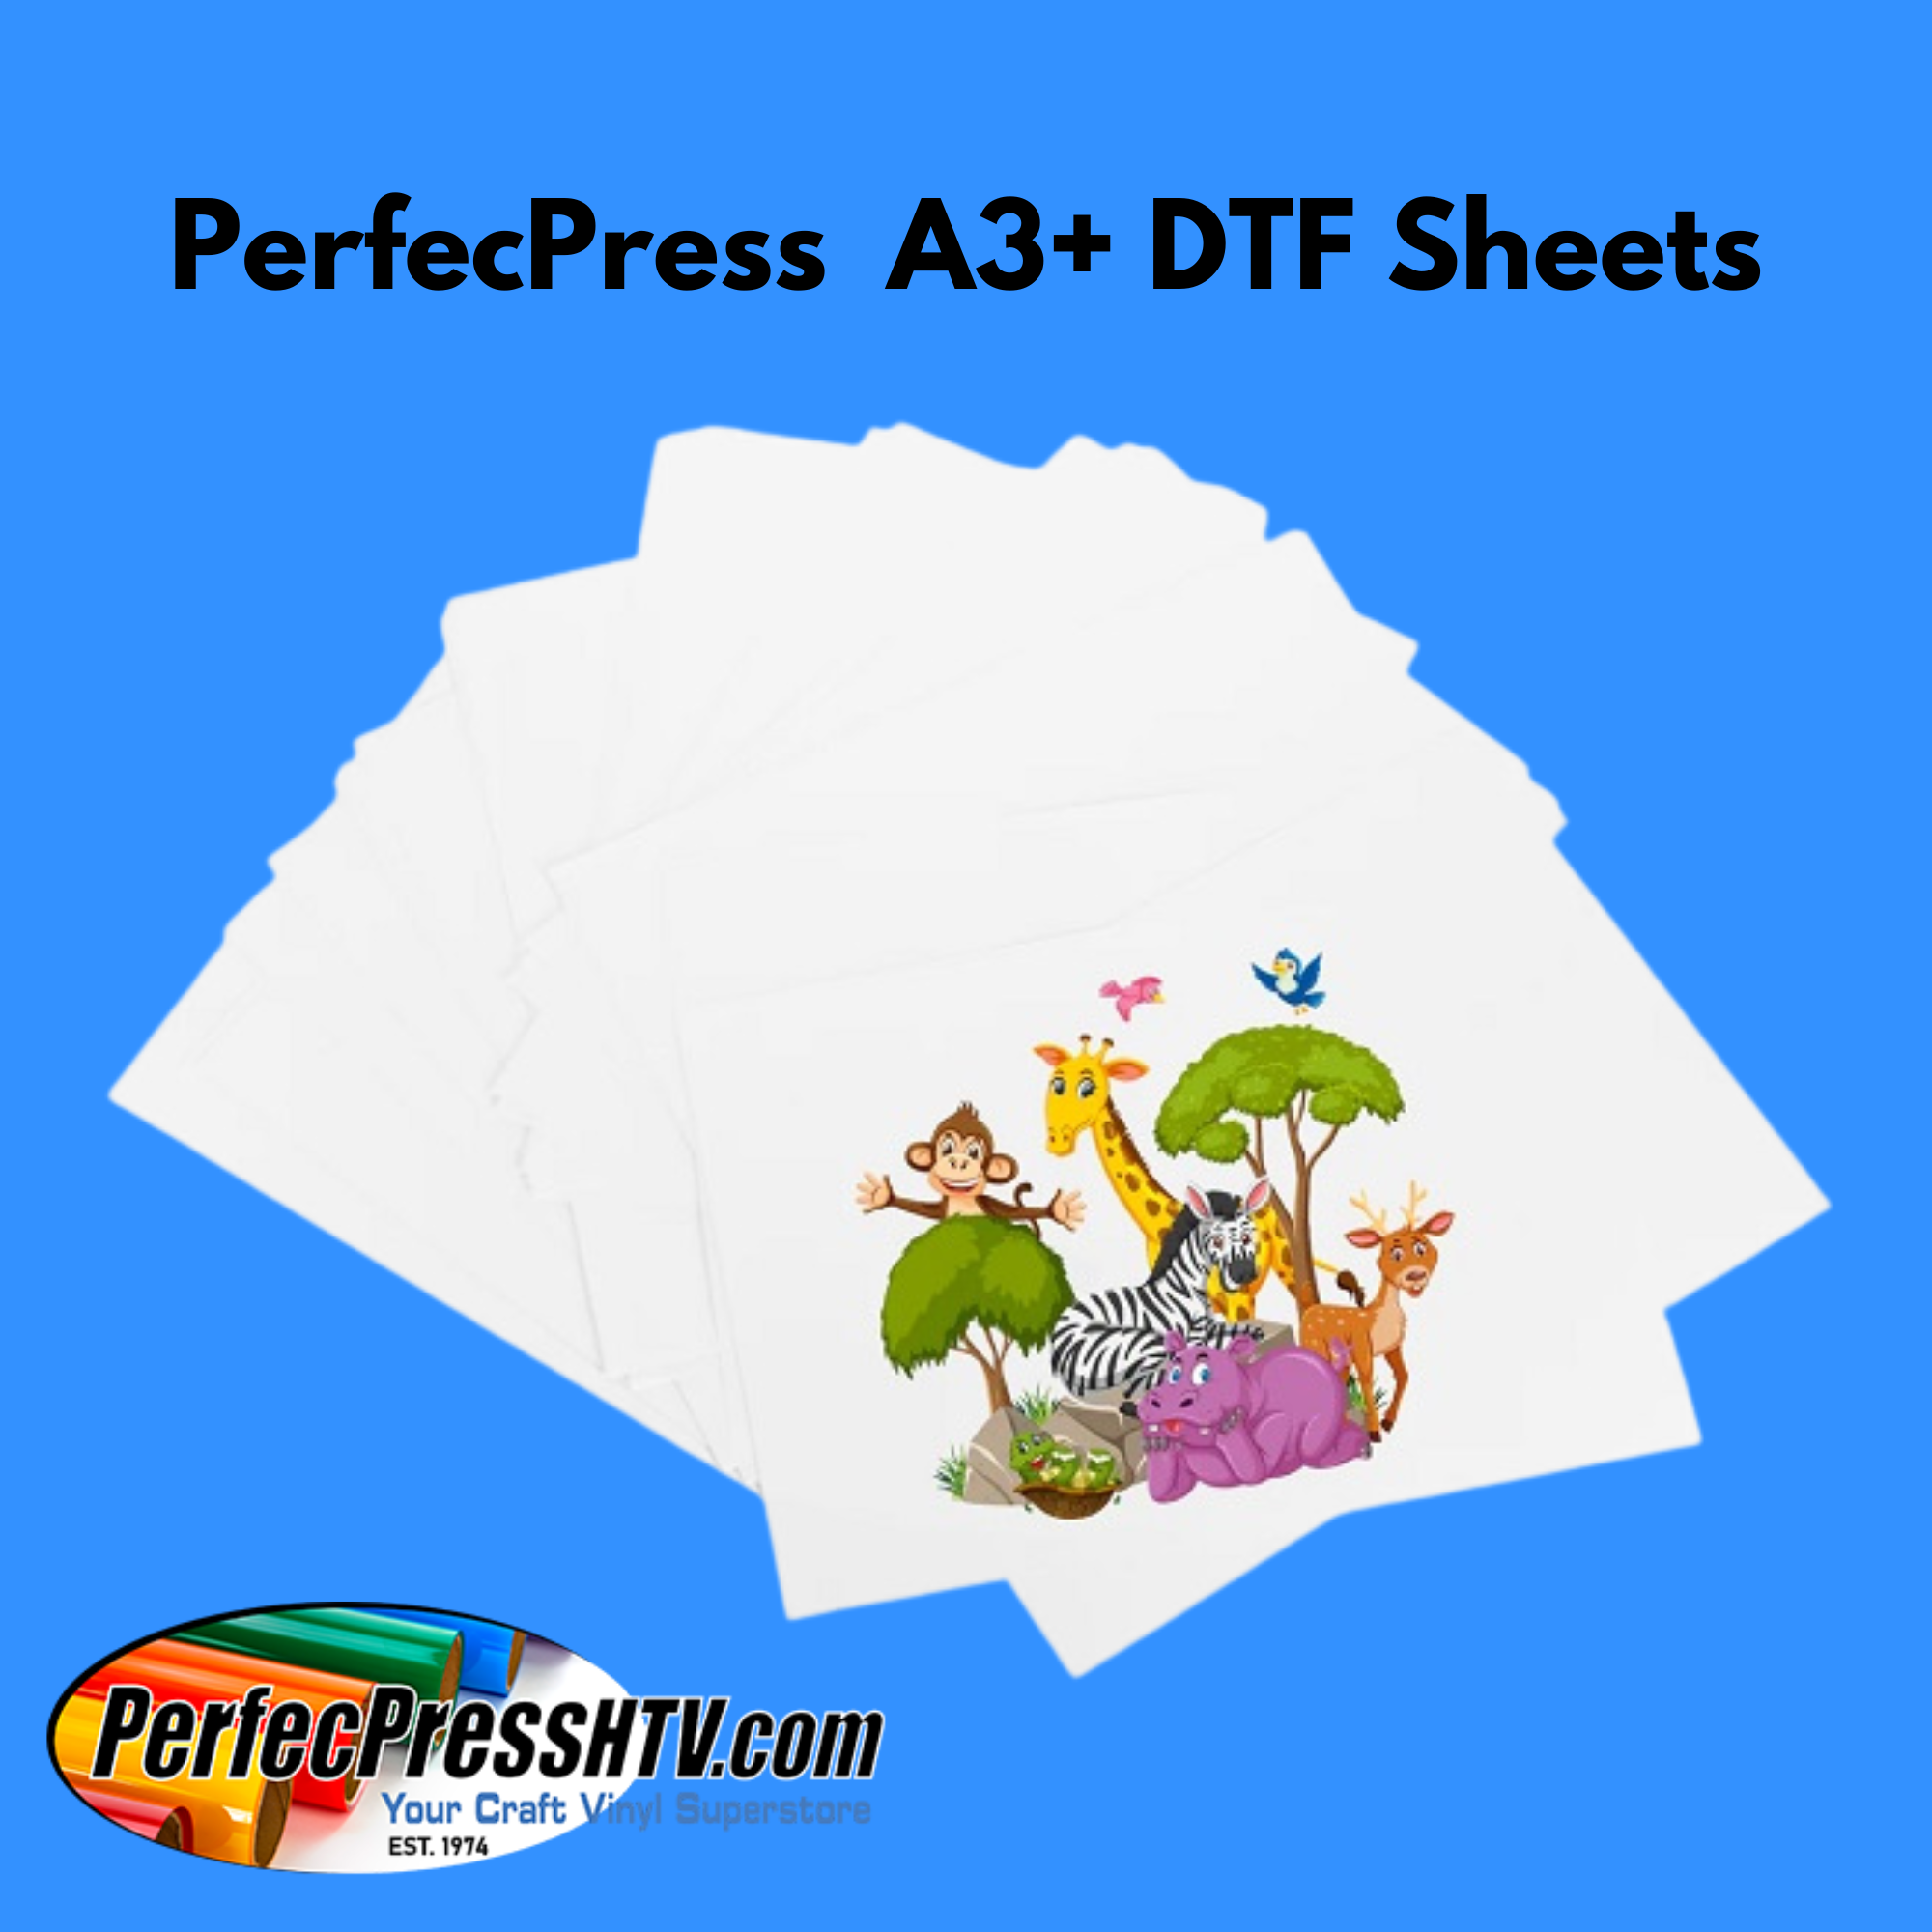 DTF Transfer Film Sheet for Digital Printing - STS Inks